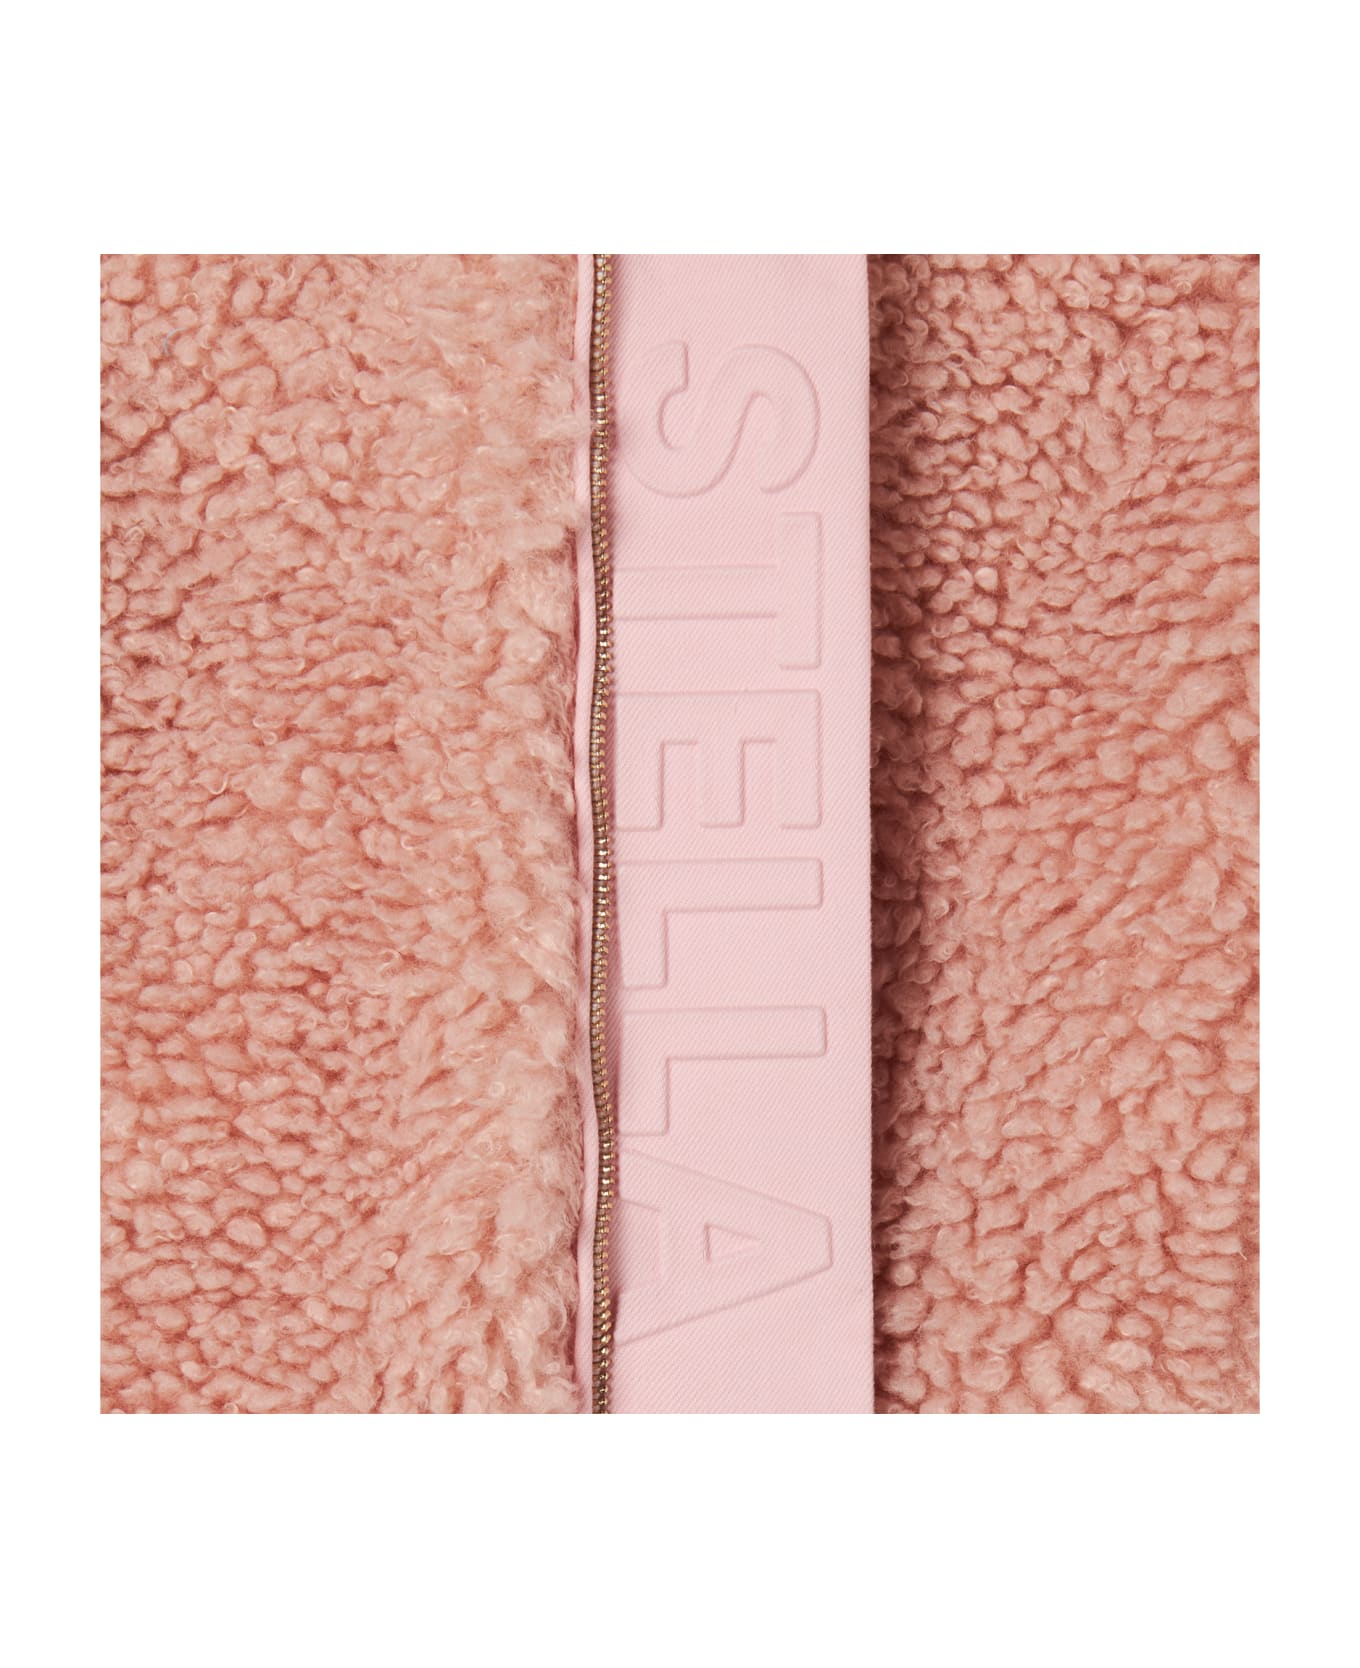 Stella McCartney Kids Faux Fur Coat With Zip - Pink